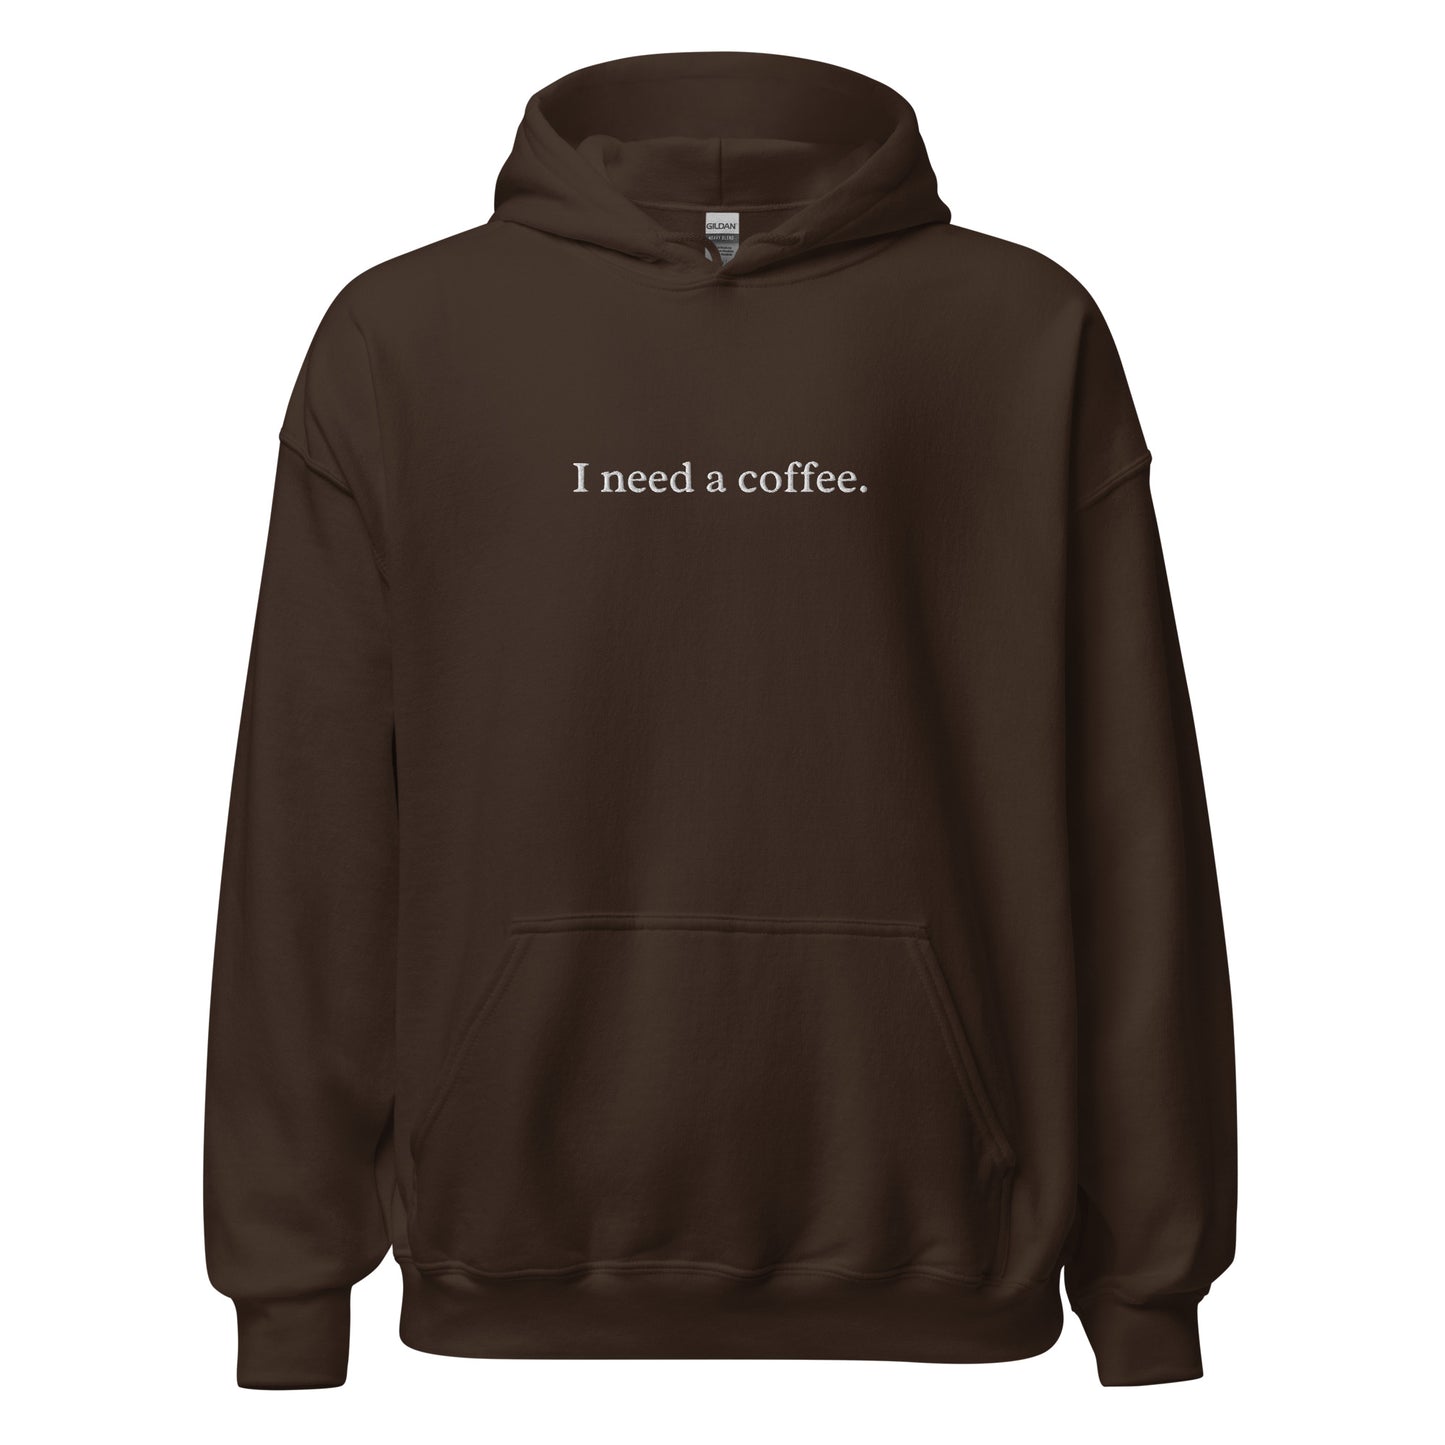 "I need a coffee" Embroided Hoodie